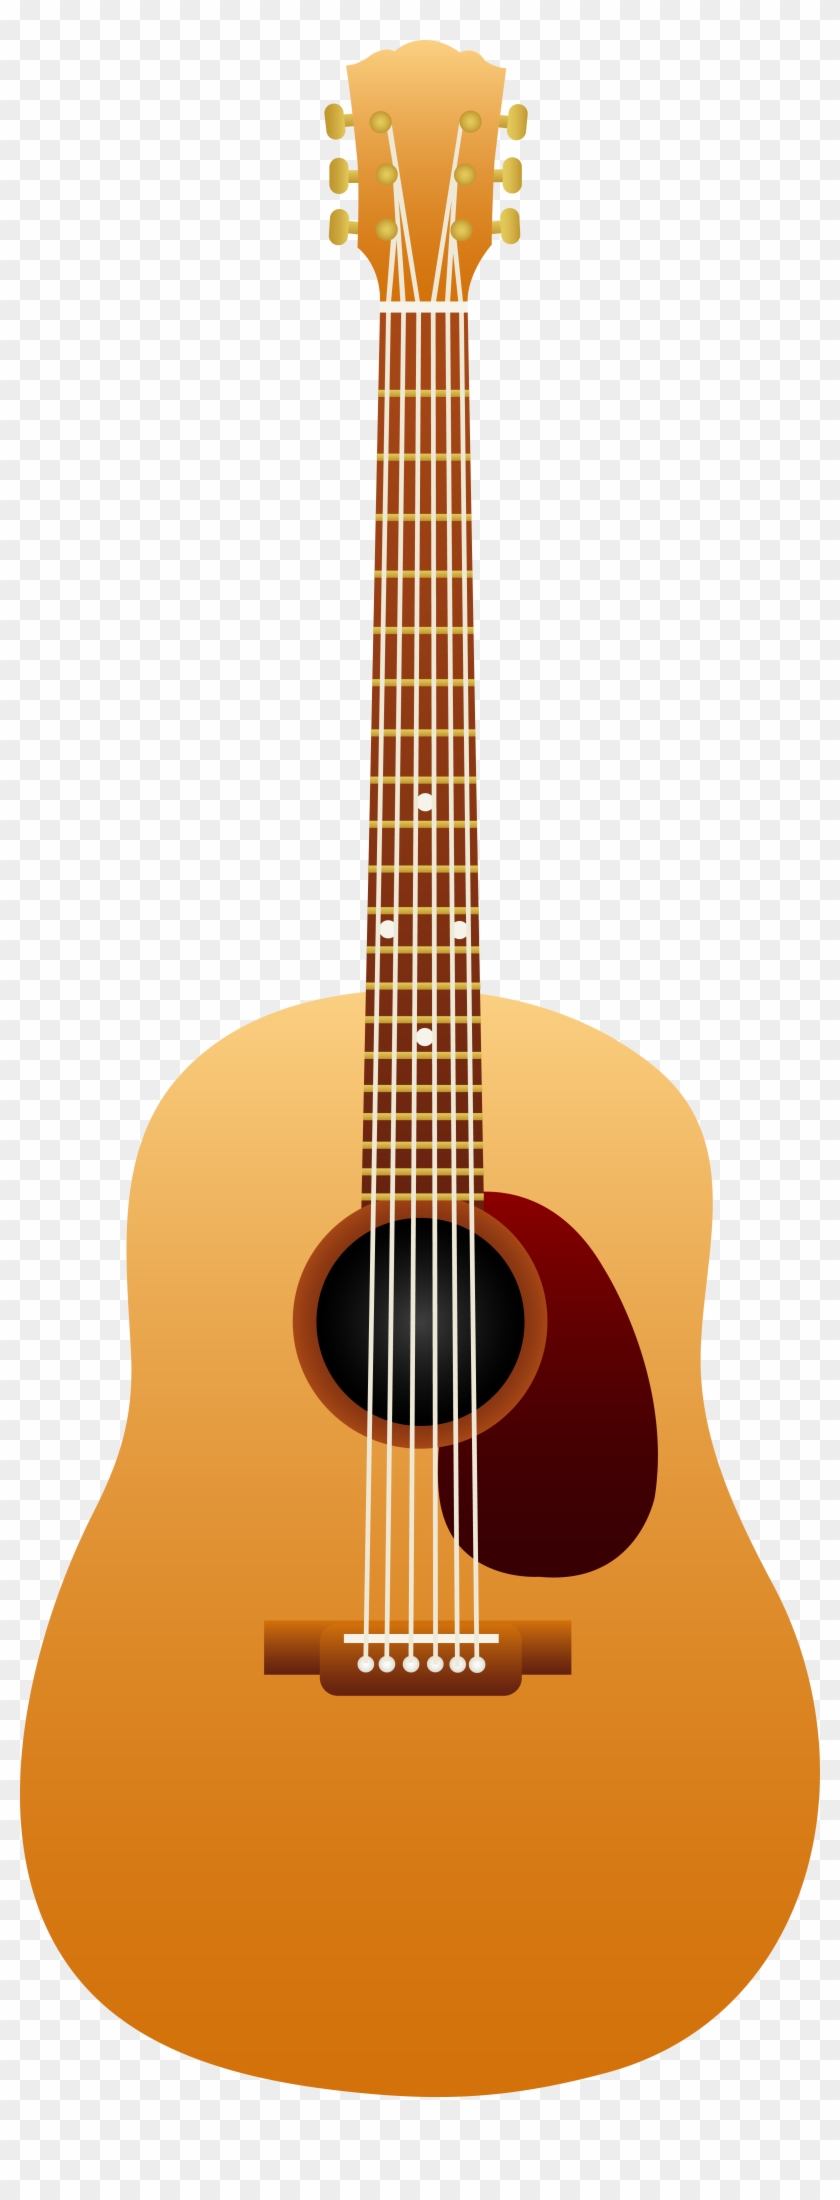 Acoustic Guitar Clip Art - Guitar Clipart No Background #305119